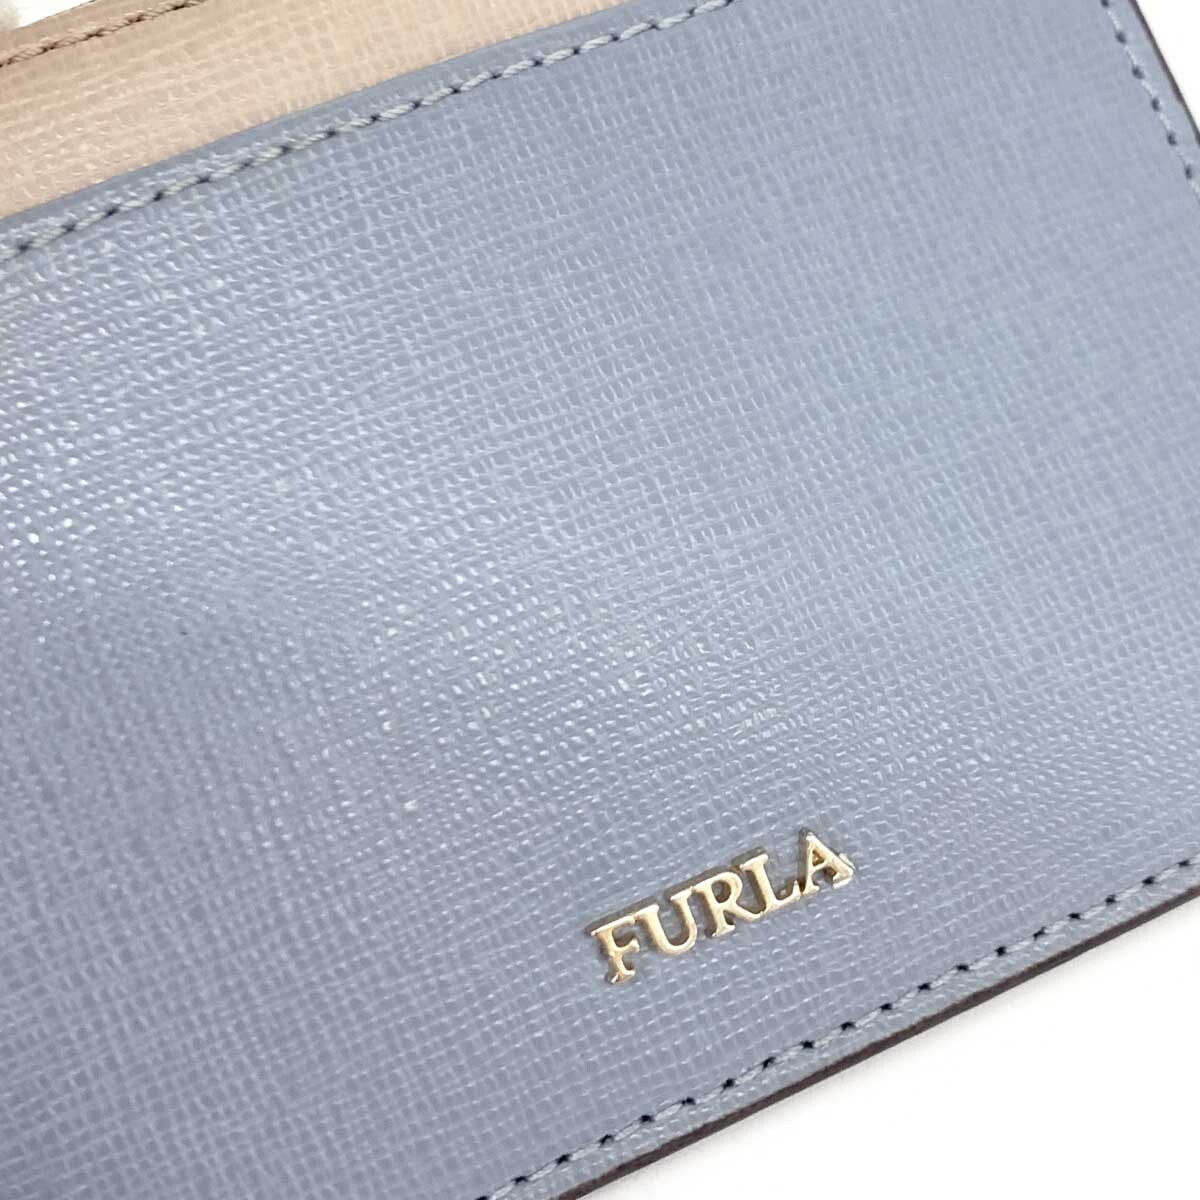 *FURLA Furla coin case * blue × beige leather lady's change purse . pass case key ring purse clothing accessories 